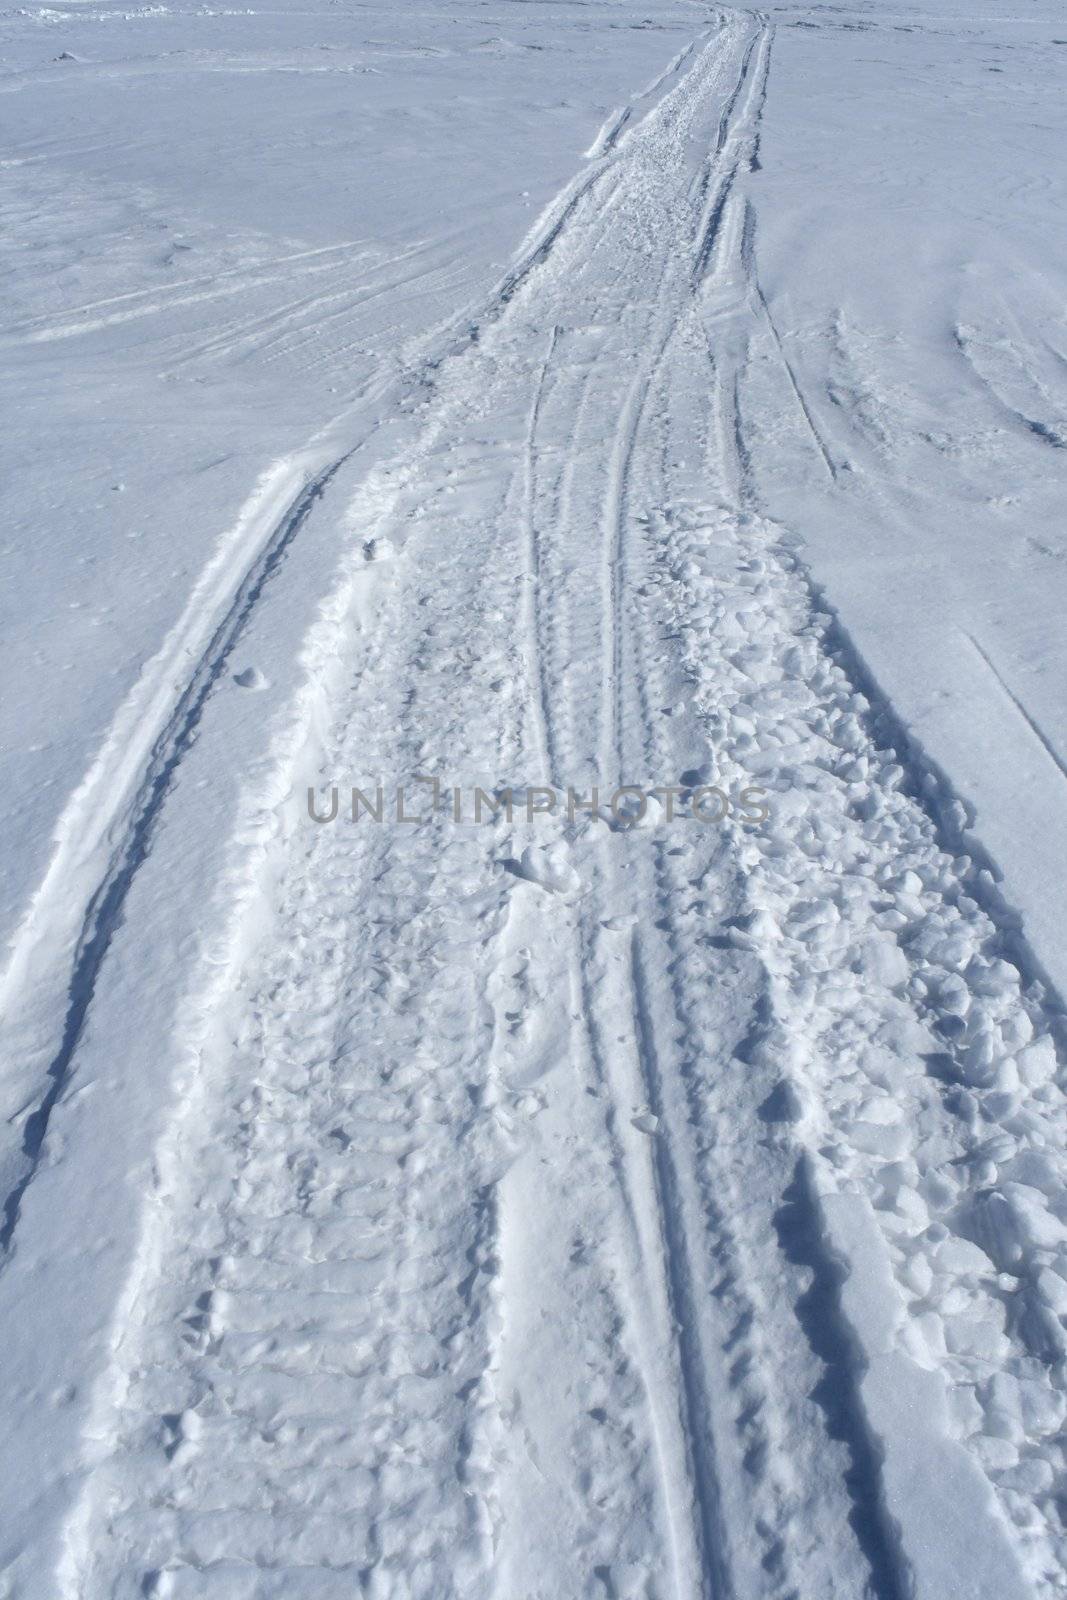 Skidoo track crossing the snowy winter terrain.